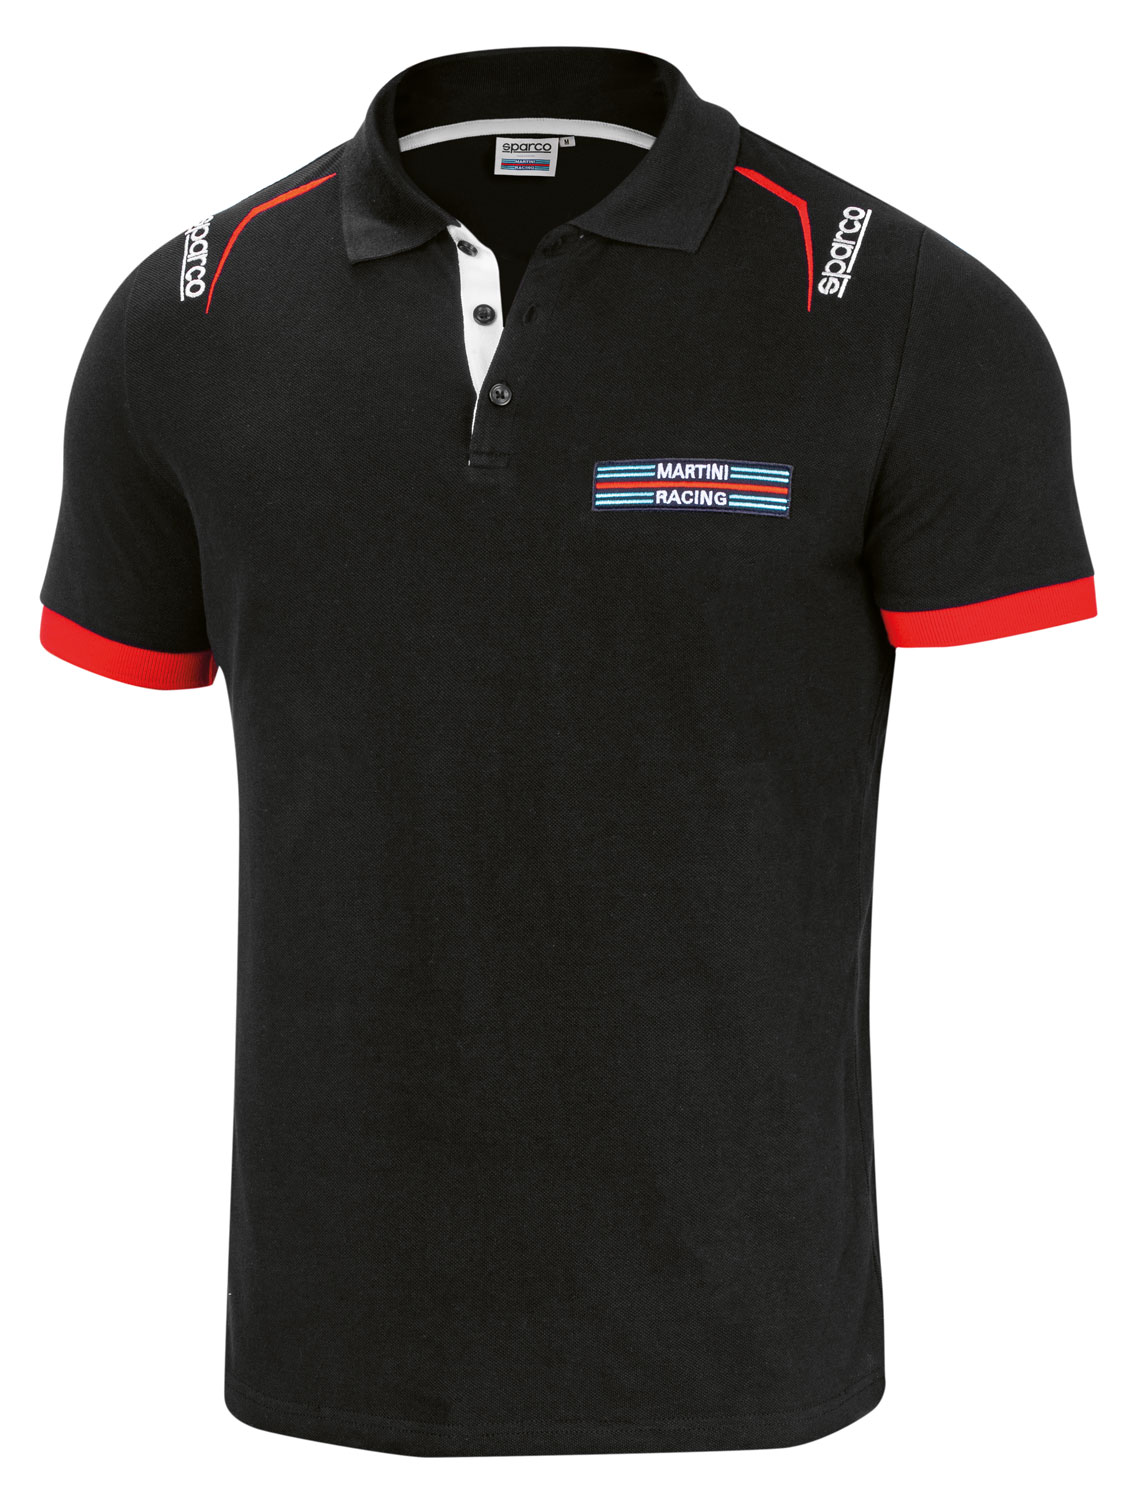 Sparco Poloshirt Martini Racing, schwarz